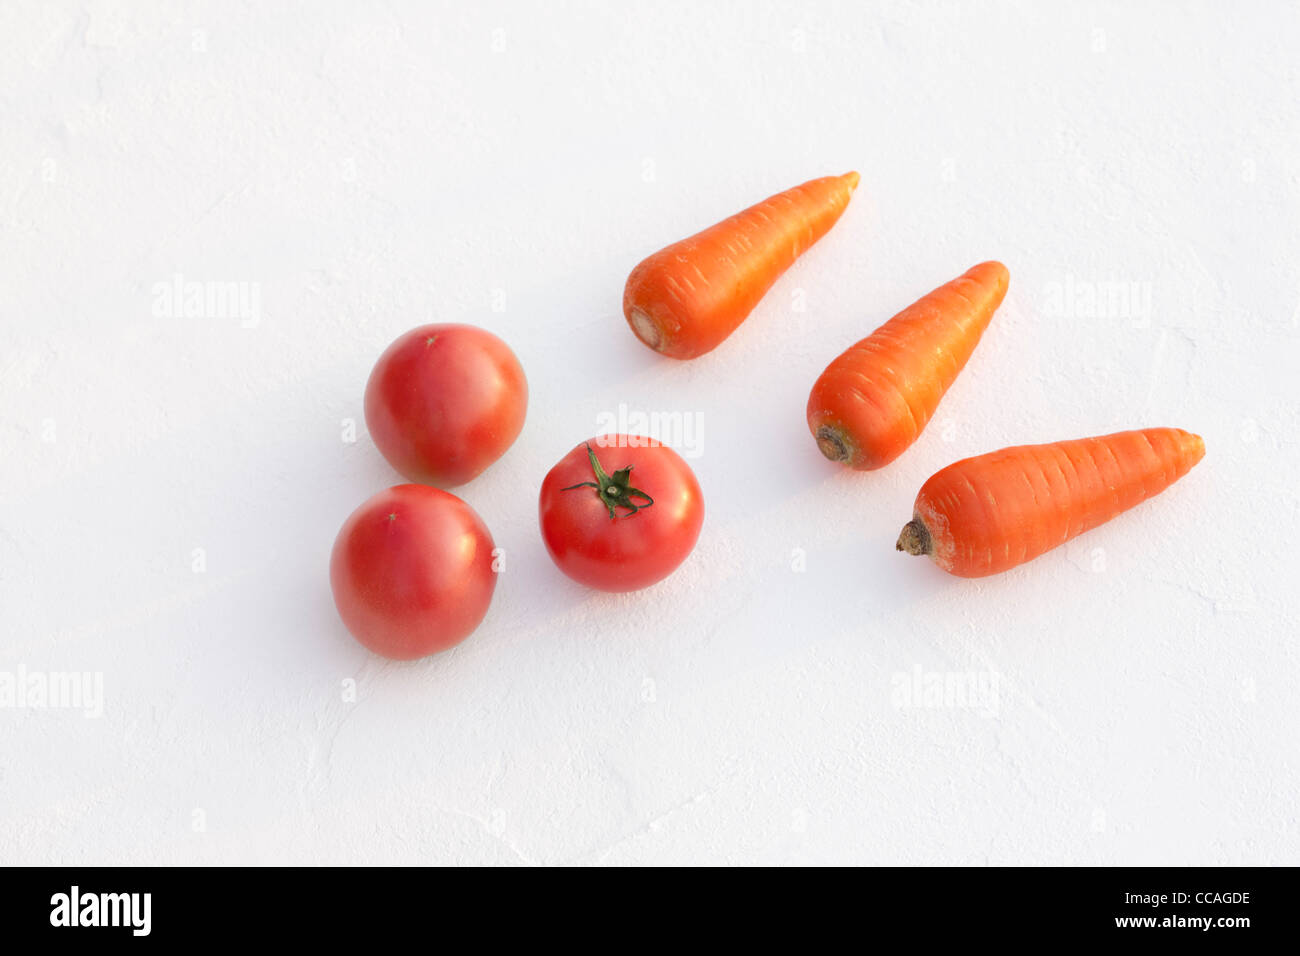 Carrots and Momotaro Tomato Stock Photo